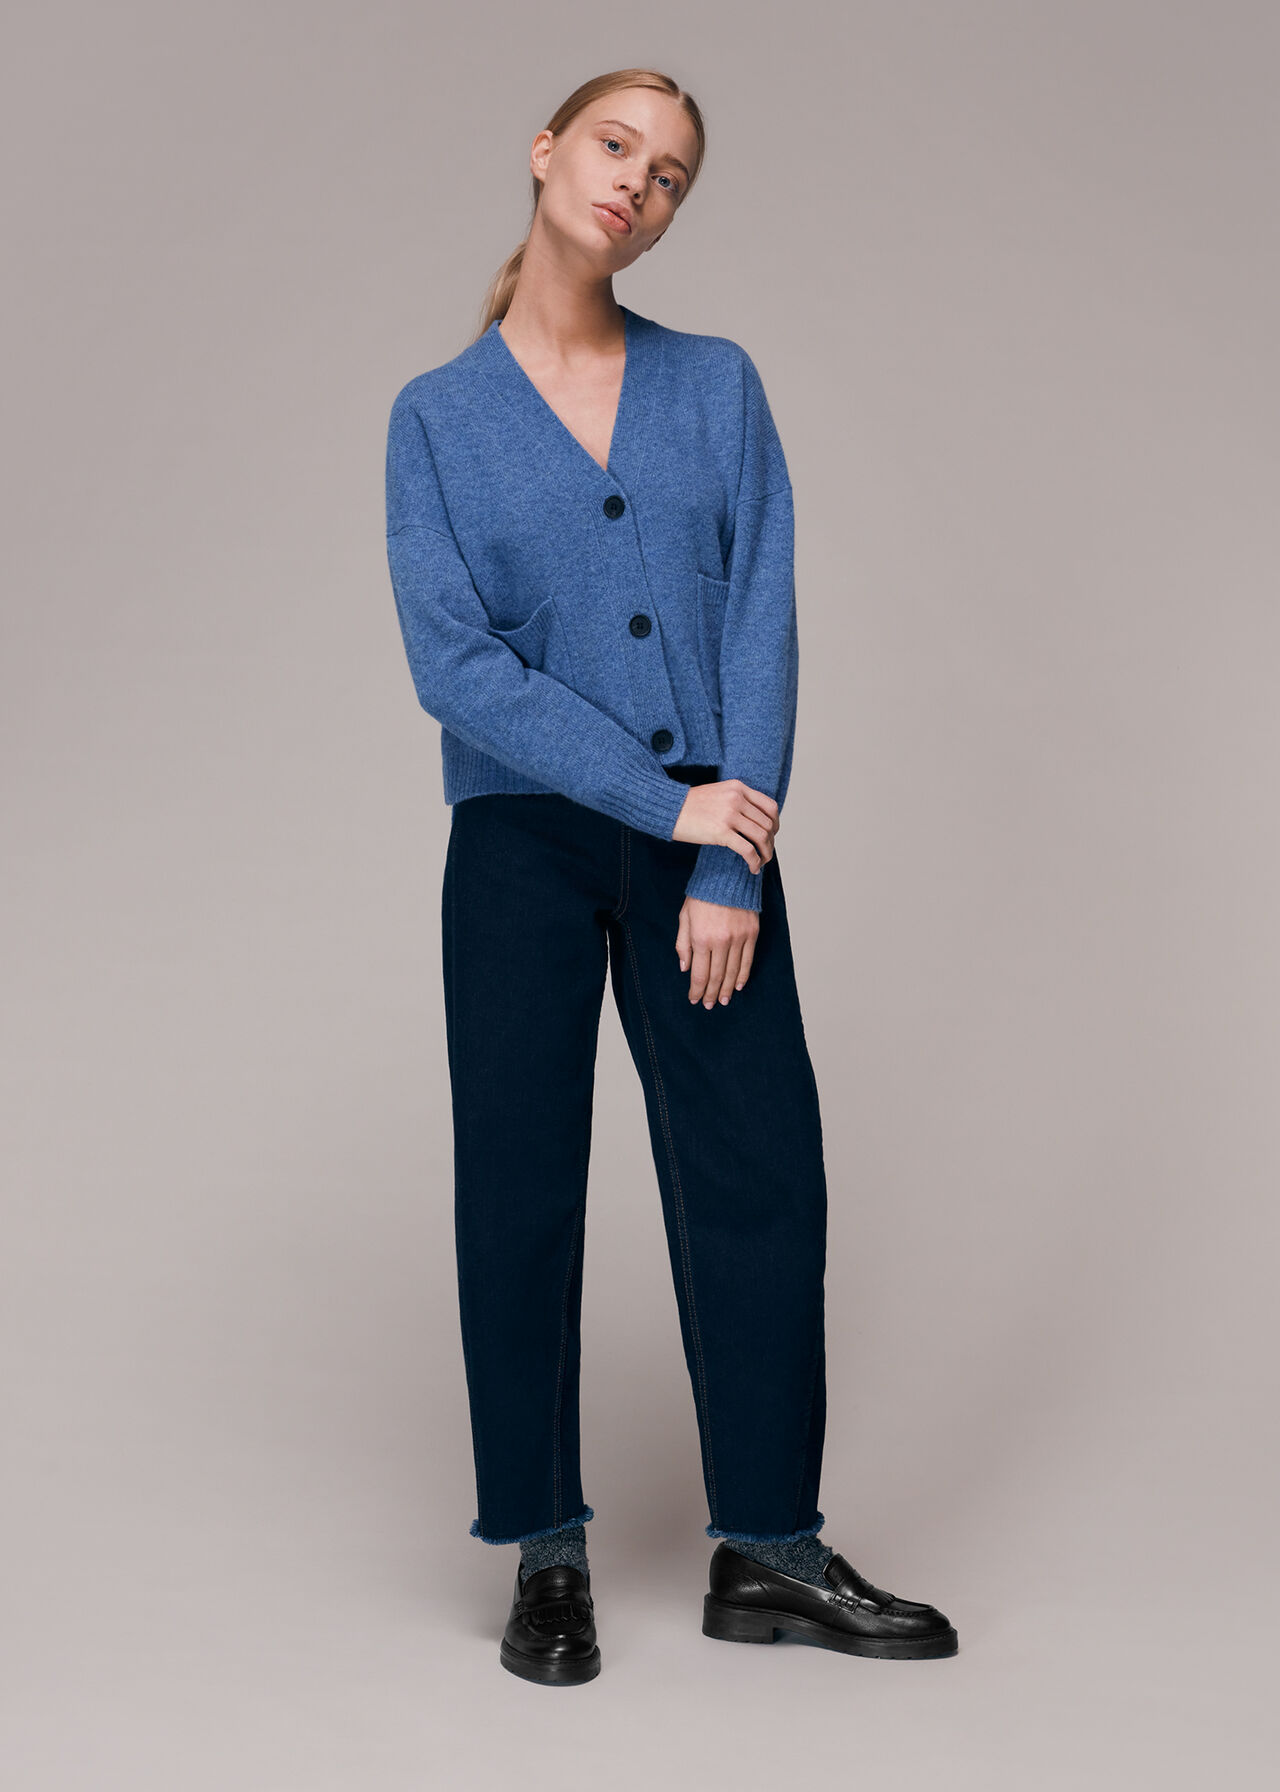 WornOnTV: Emily's turquoise blue cardigan and printed pleated mini